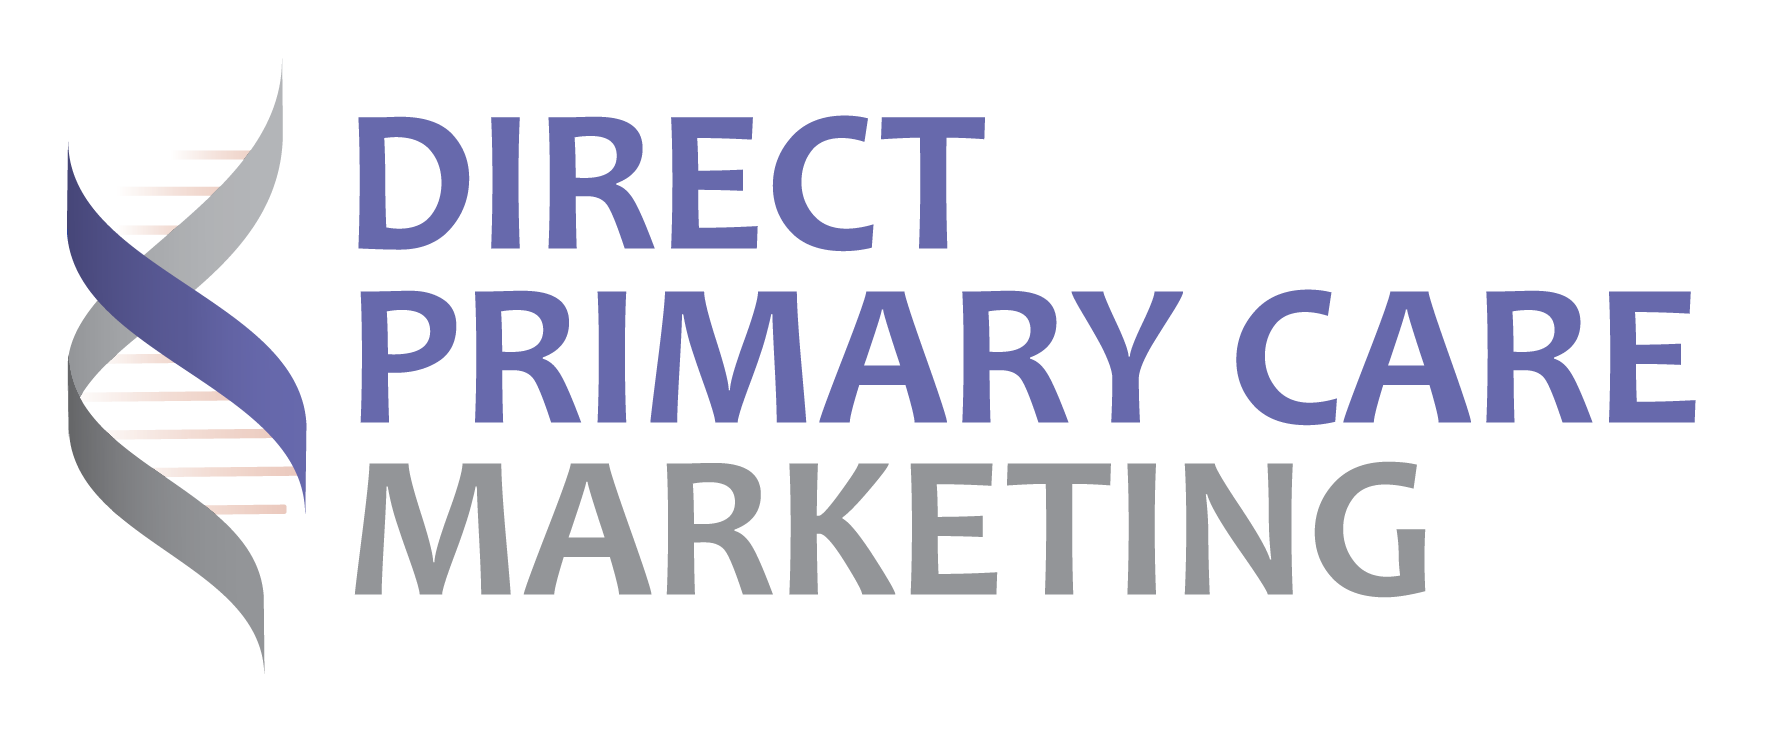 Direct Primary Care Marketing